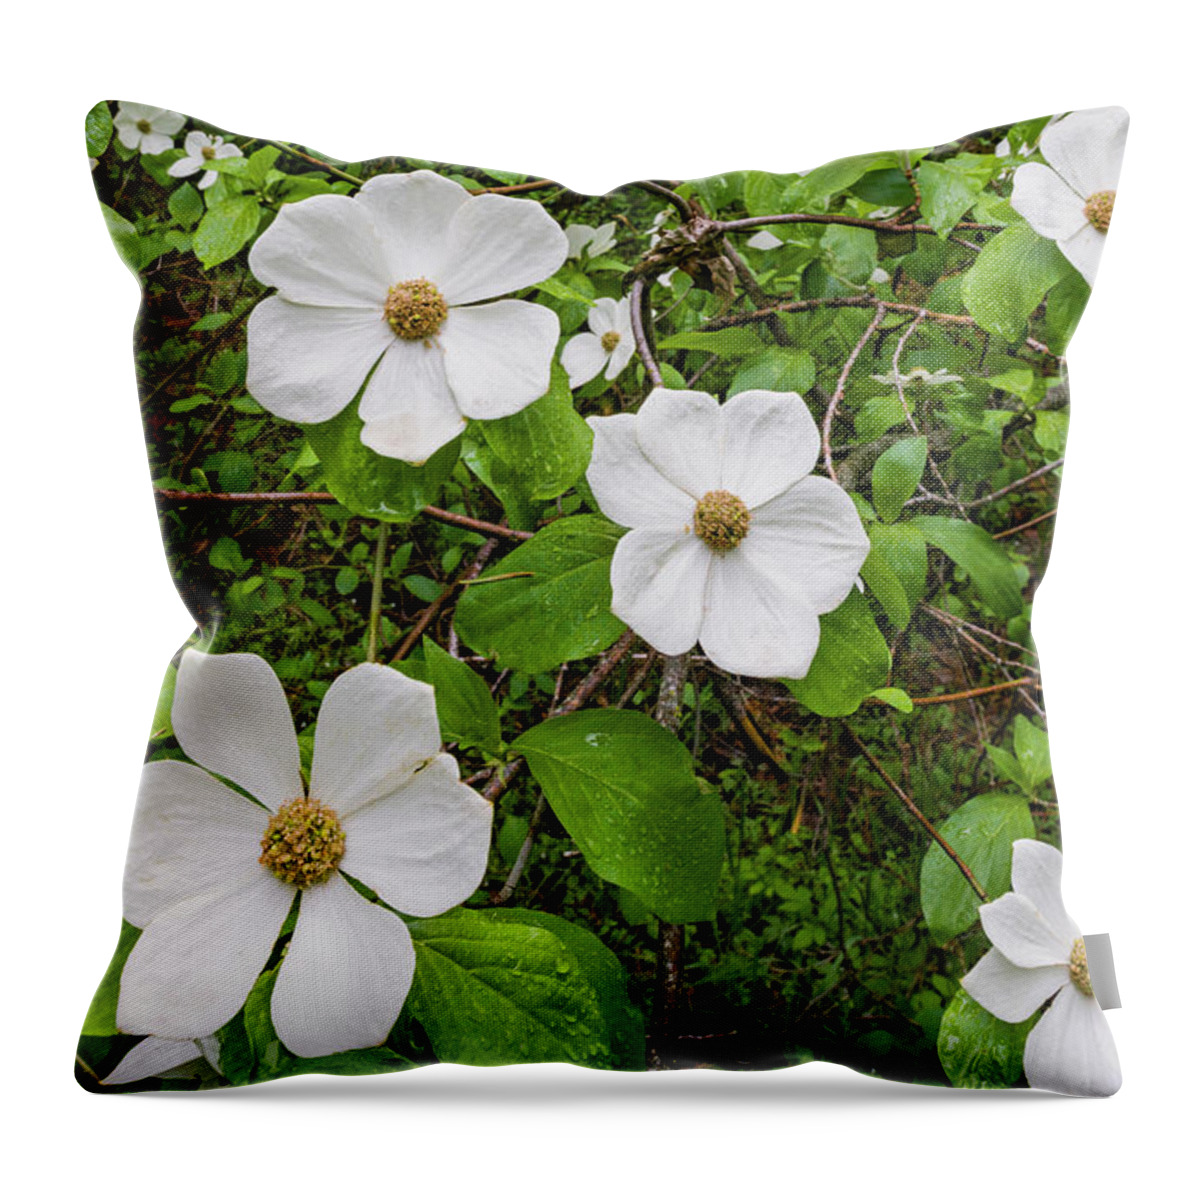 Jeff Foott Throw Pillow featuring the photograph Mountain Dogwood Flowers by Jeff Foott